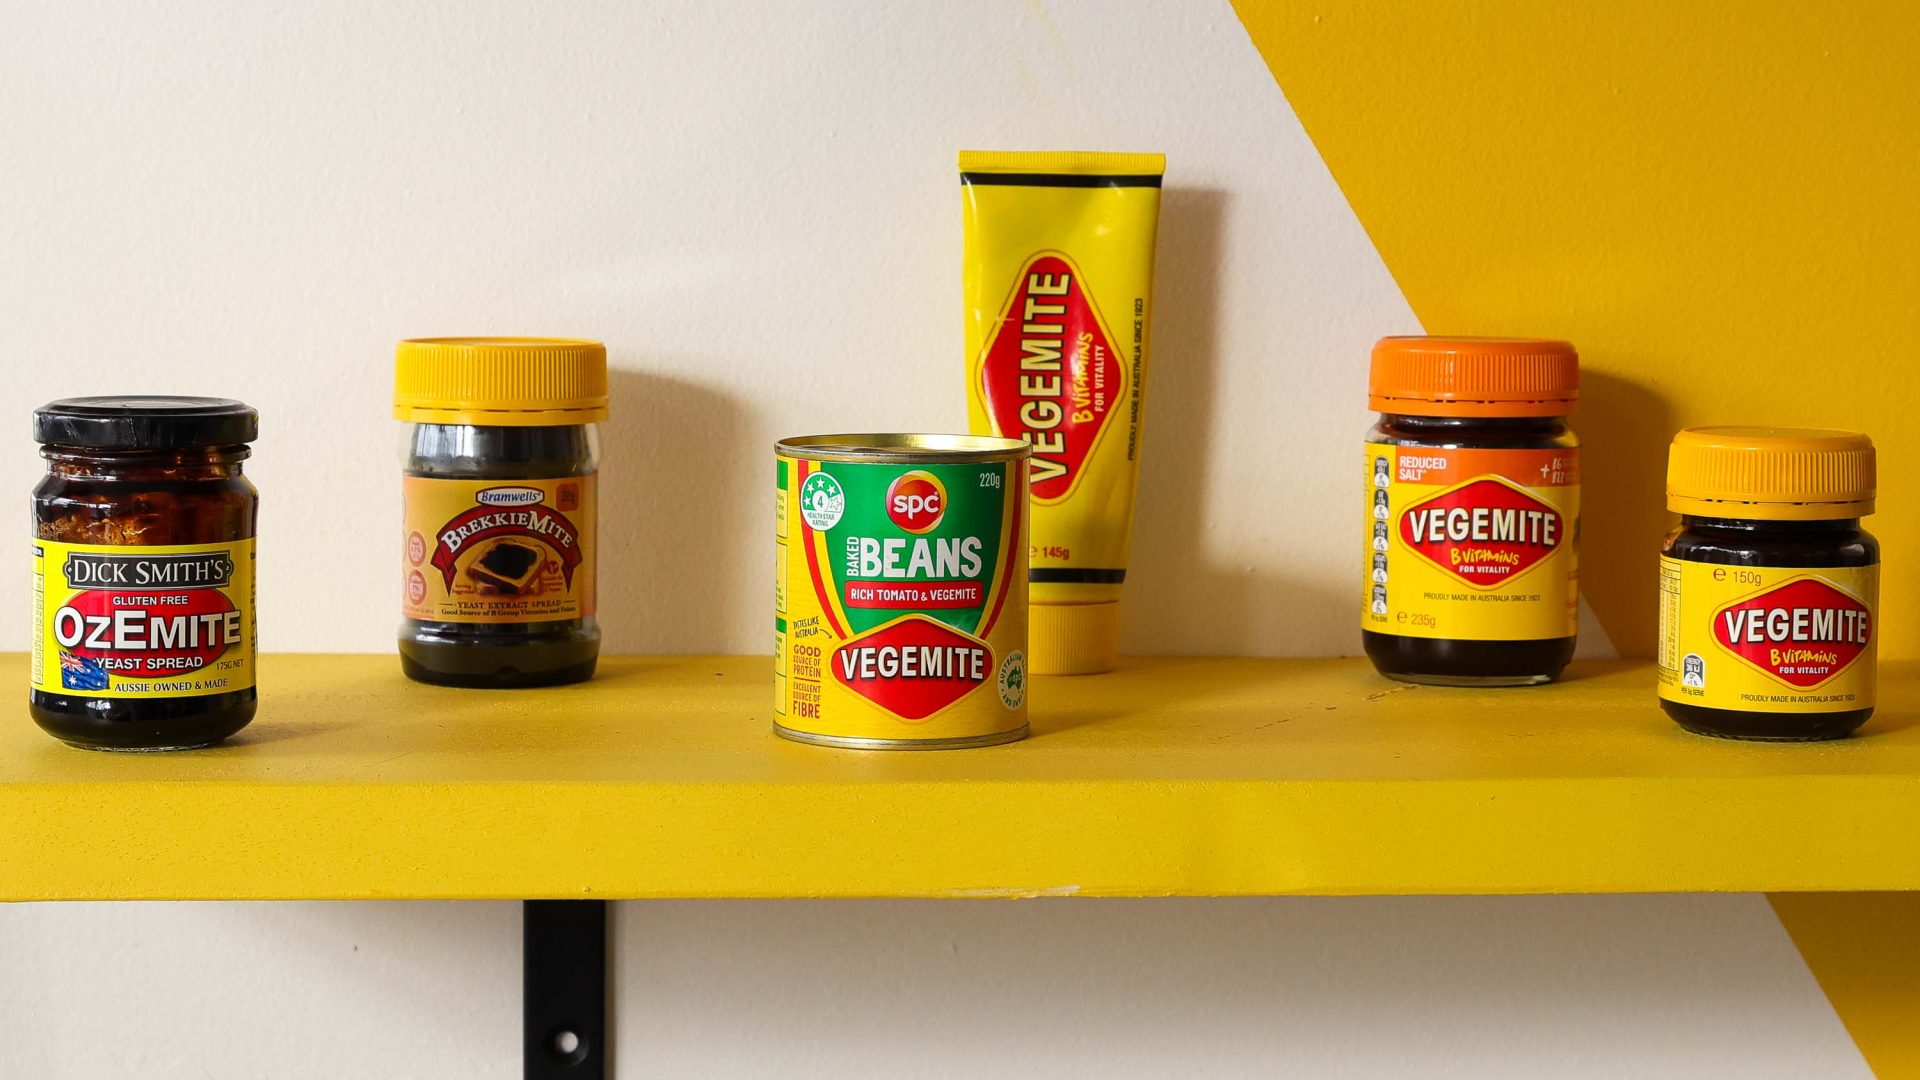 Happy 100th birthday Vegemite: How the iconic Australian snack spread evolved into a cultural phenomenon